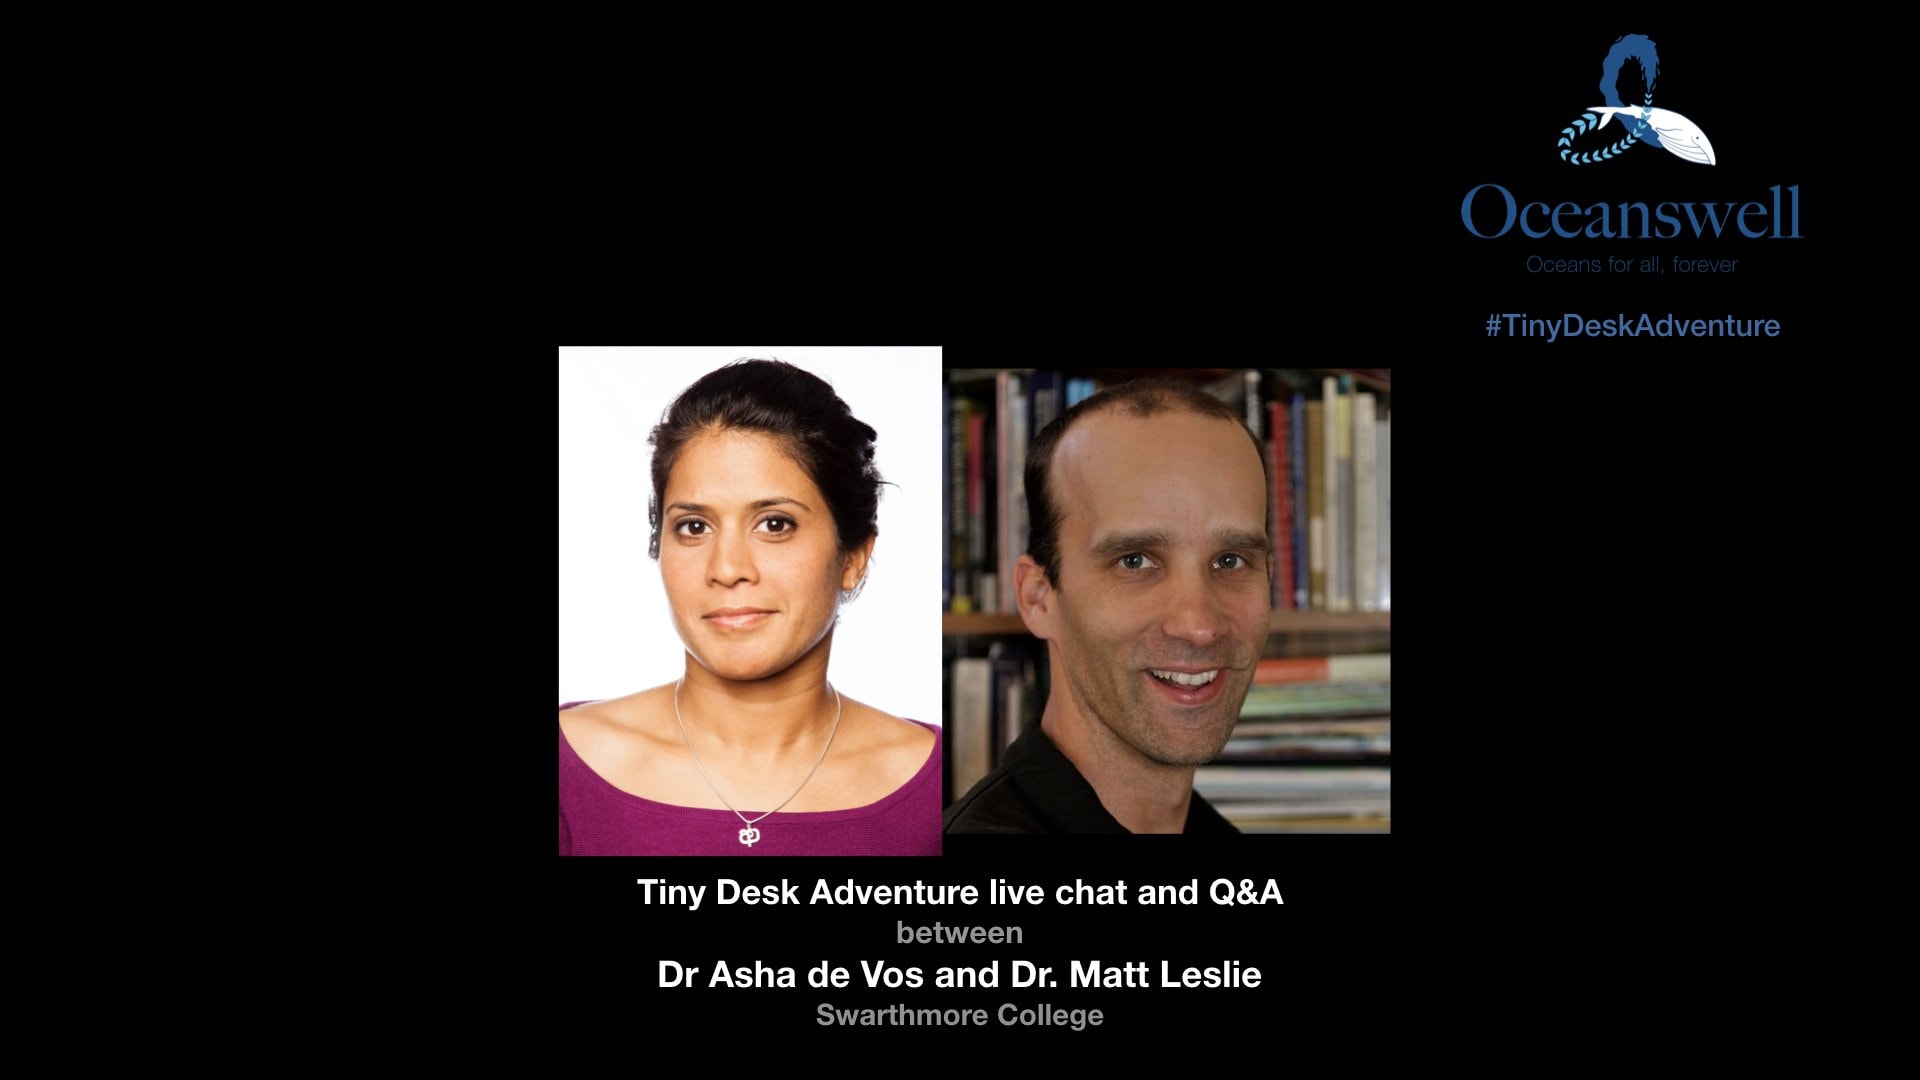 TINY DESK ADVENTURES INSTAGRAM LIVE Q&A WITH DR ASHA DE VOS AND DR MATT LESLIE 1